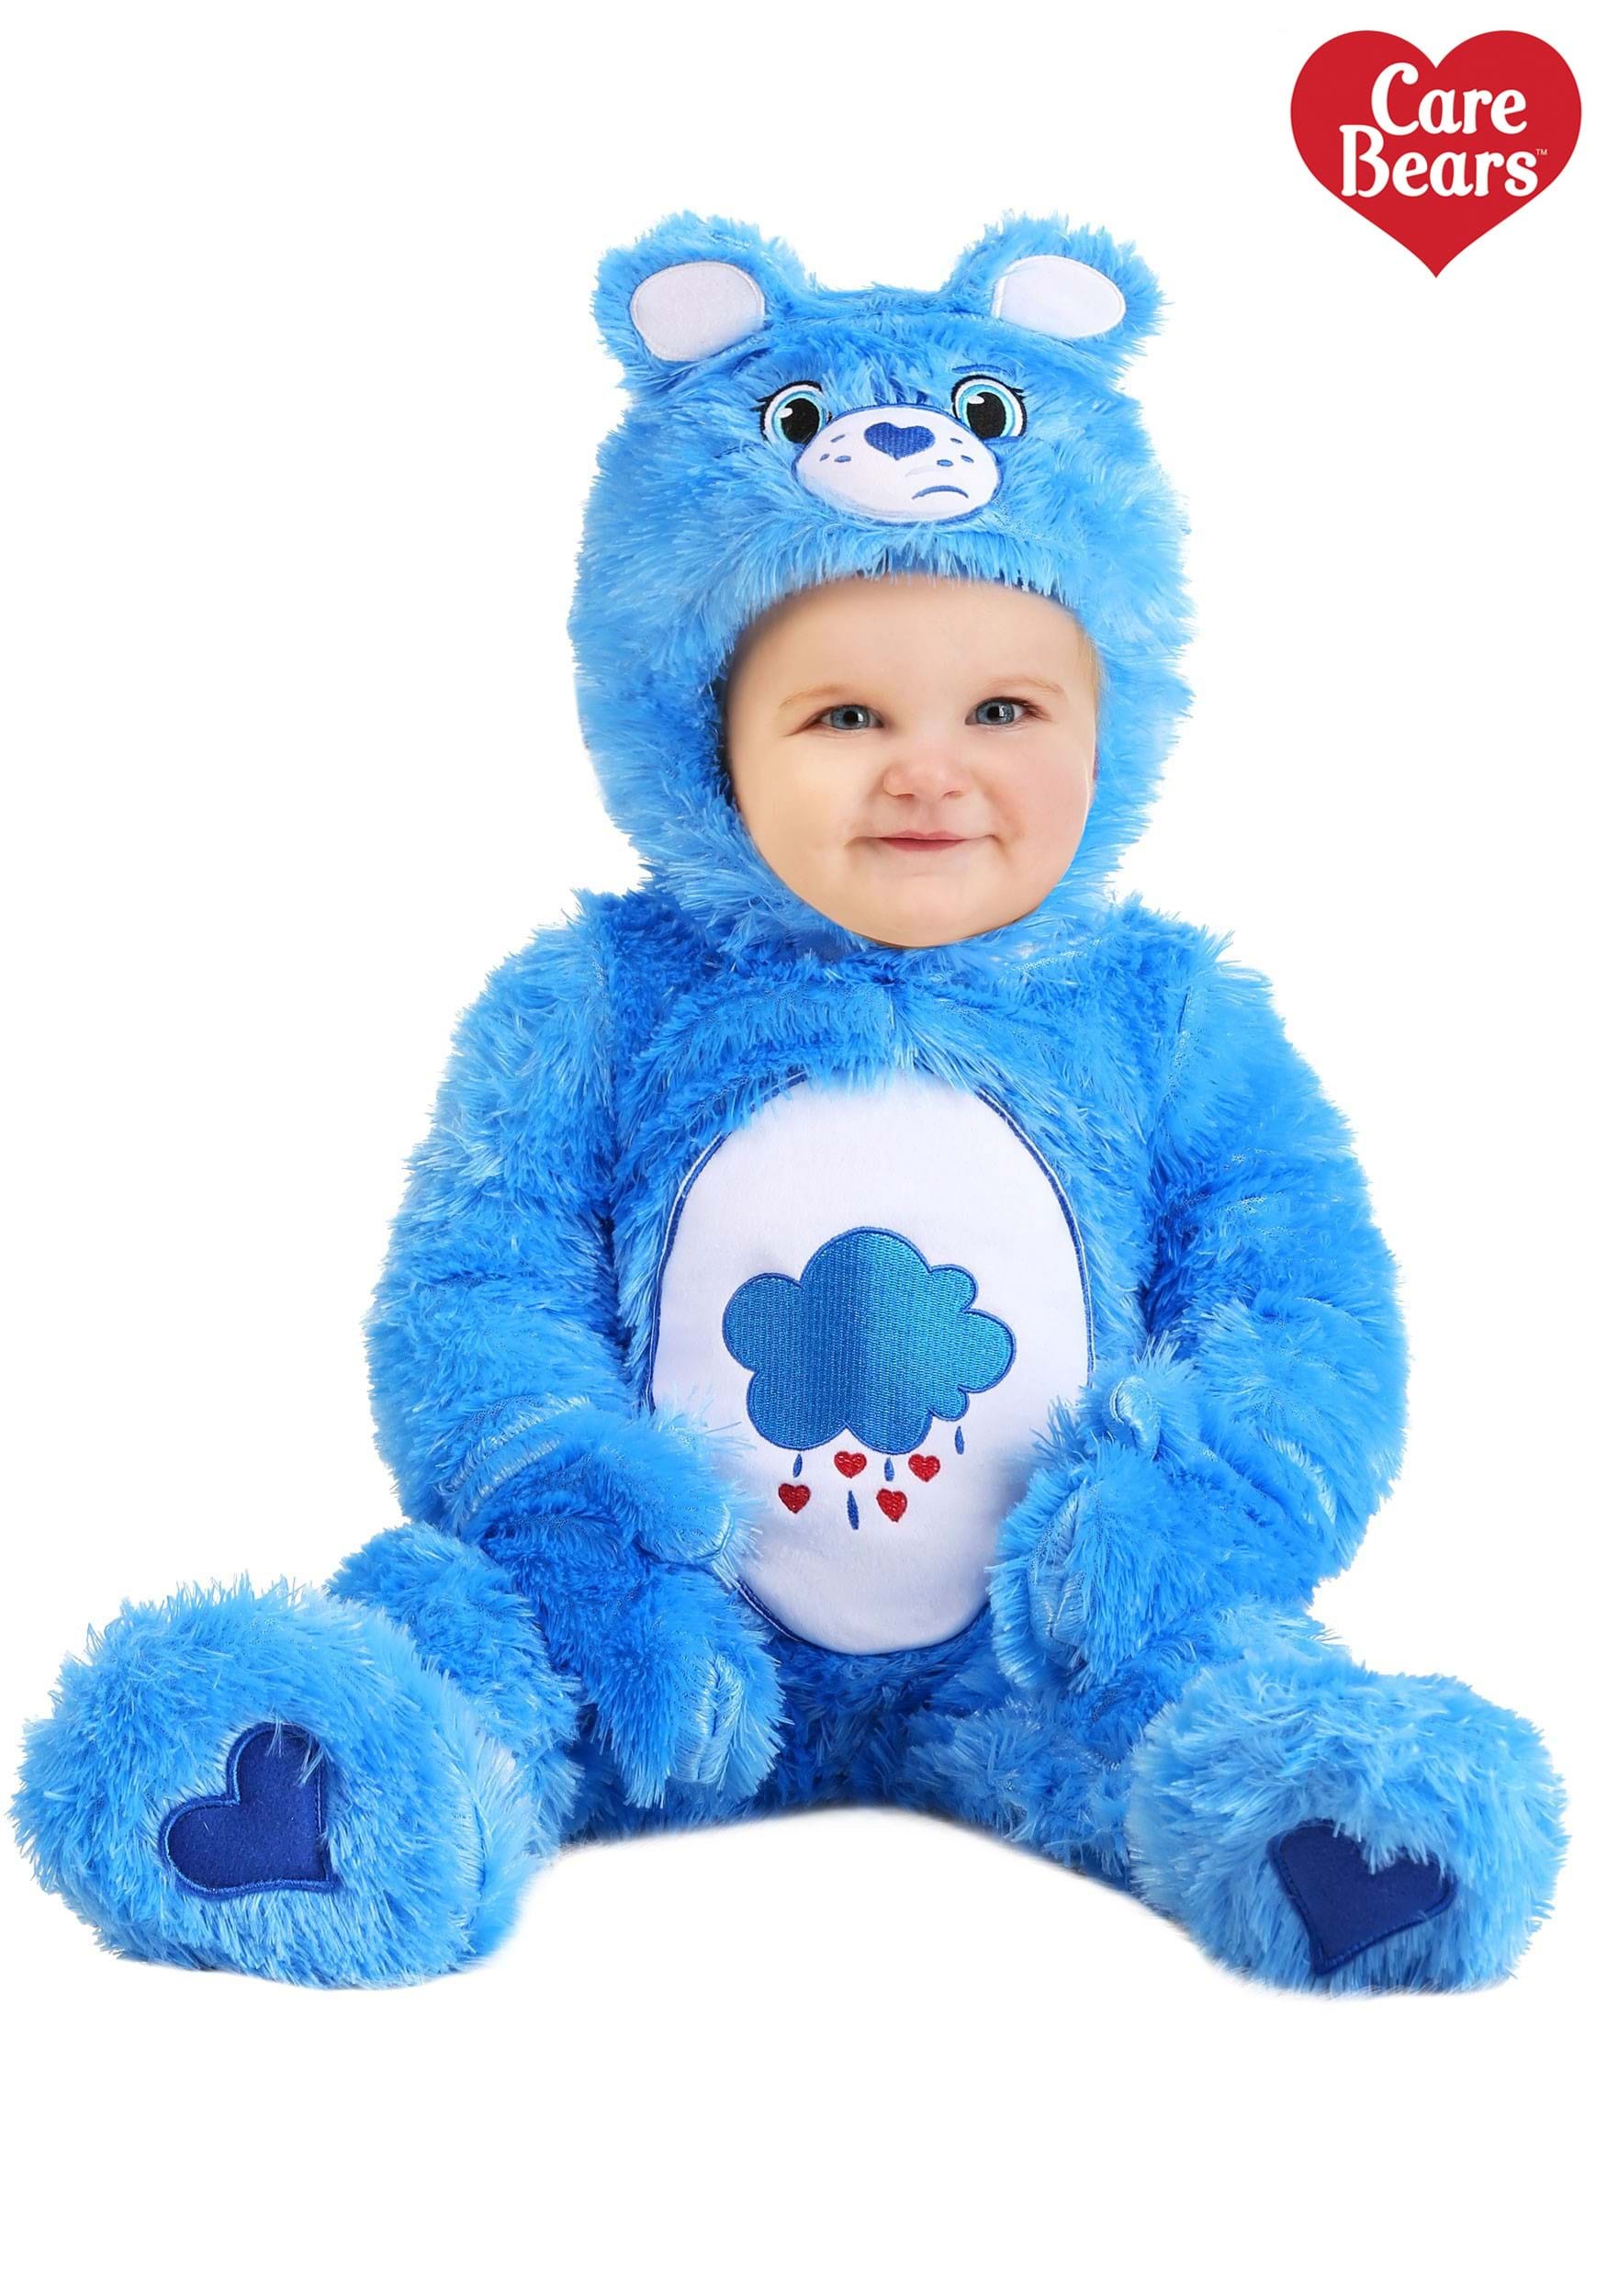 teddy bear costume baby